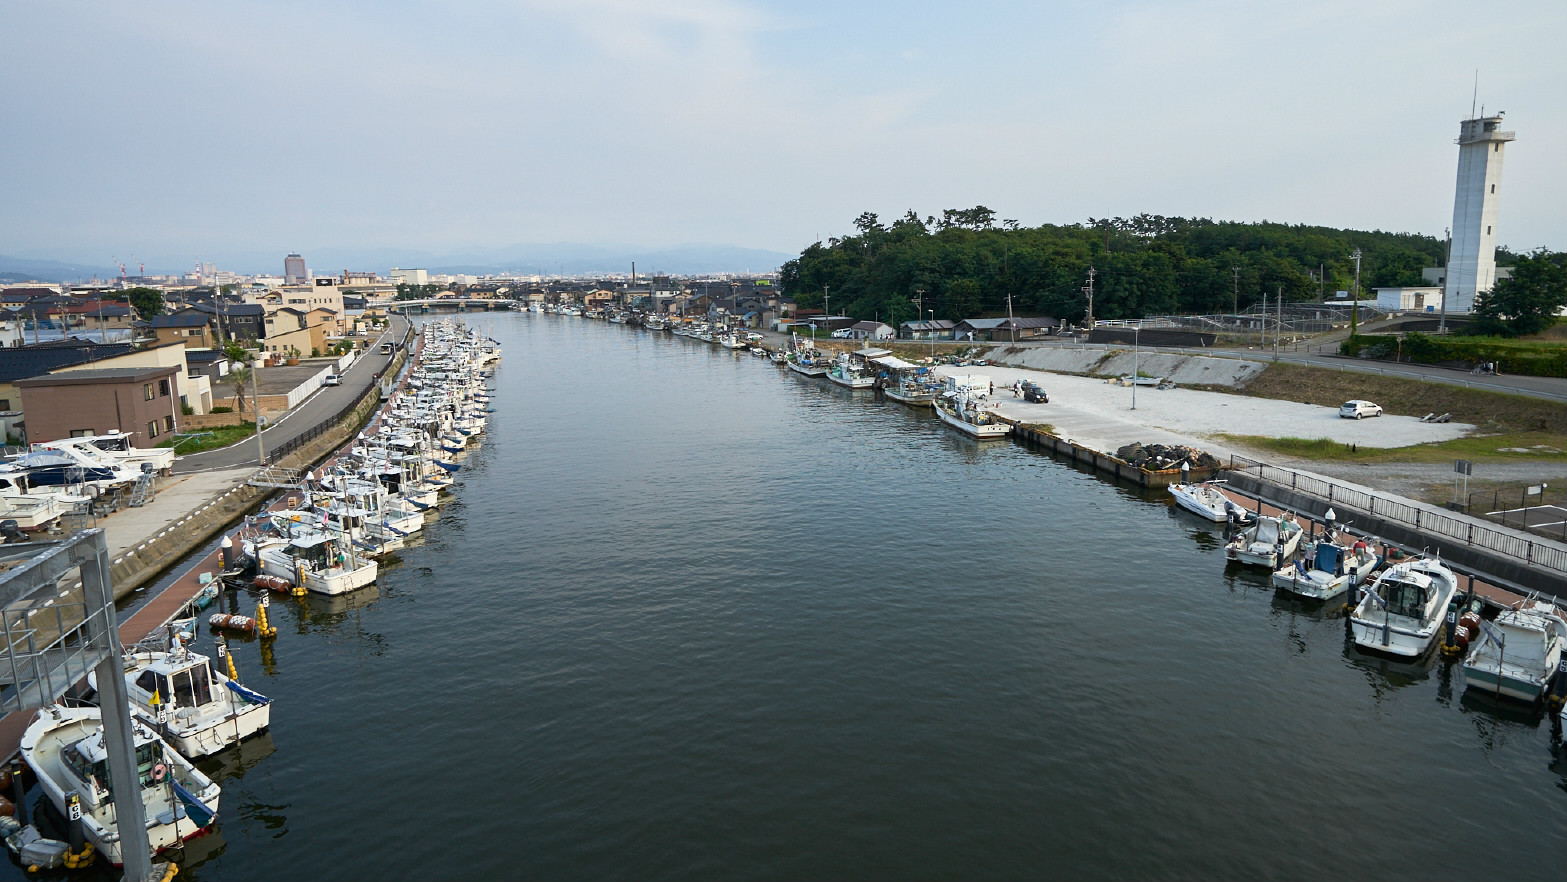 Port of Ono, courtesy of the Kanazawa Tourism Association